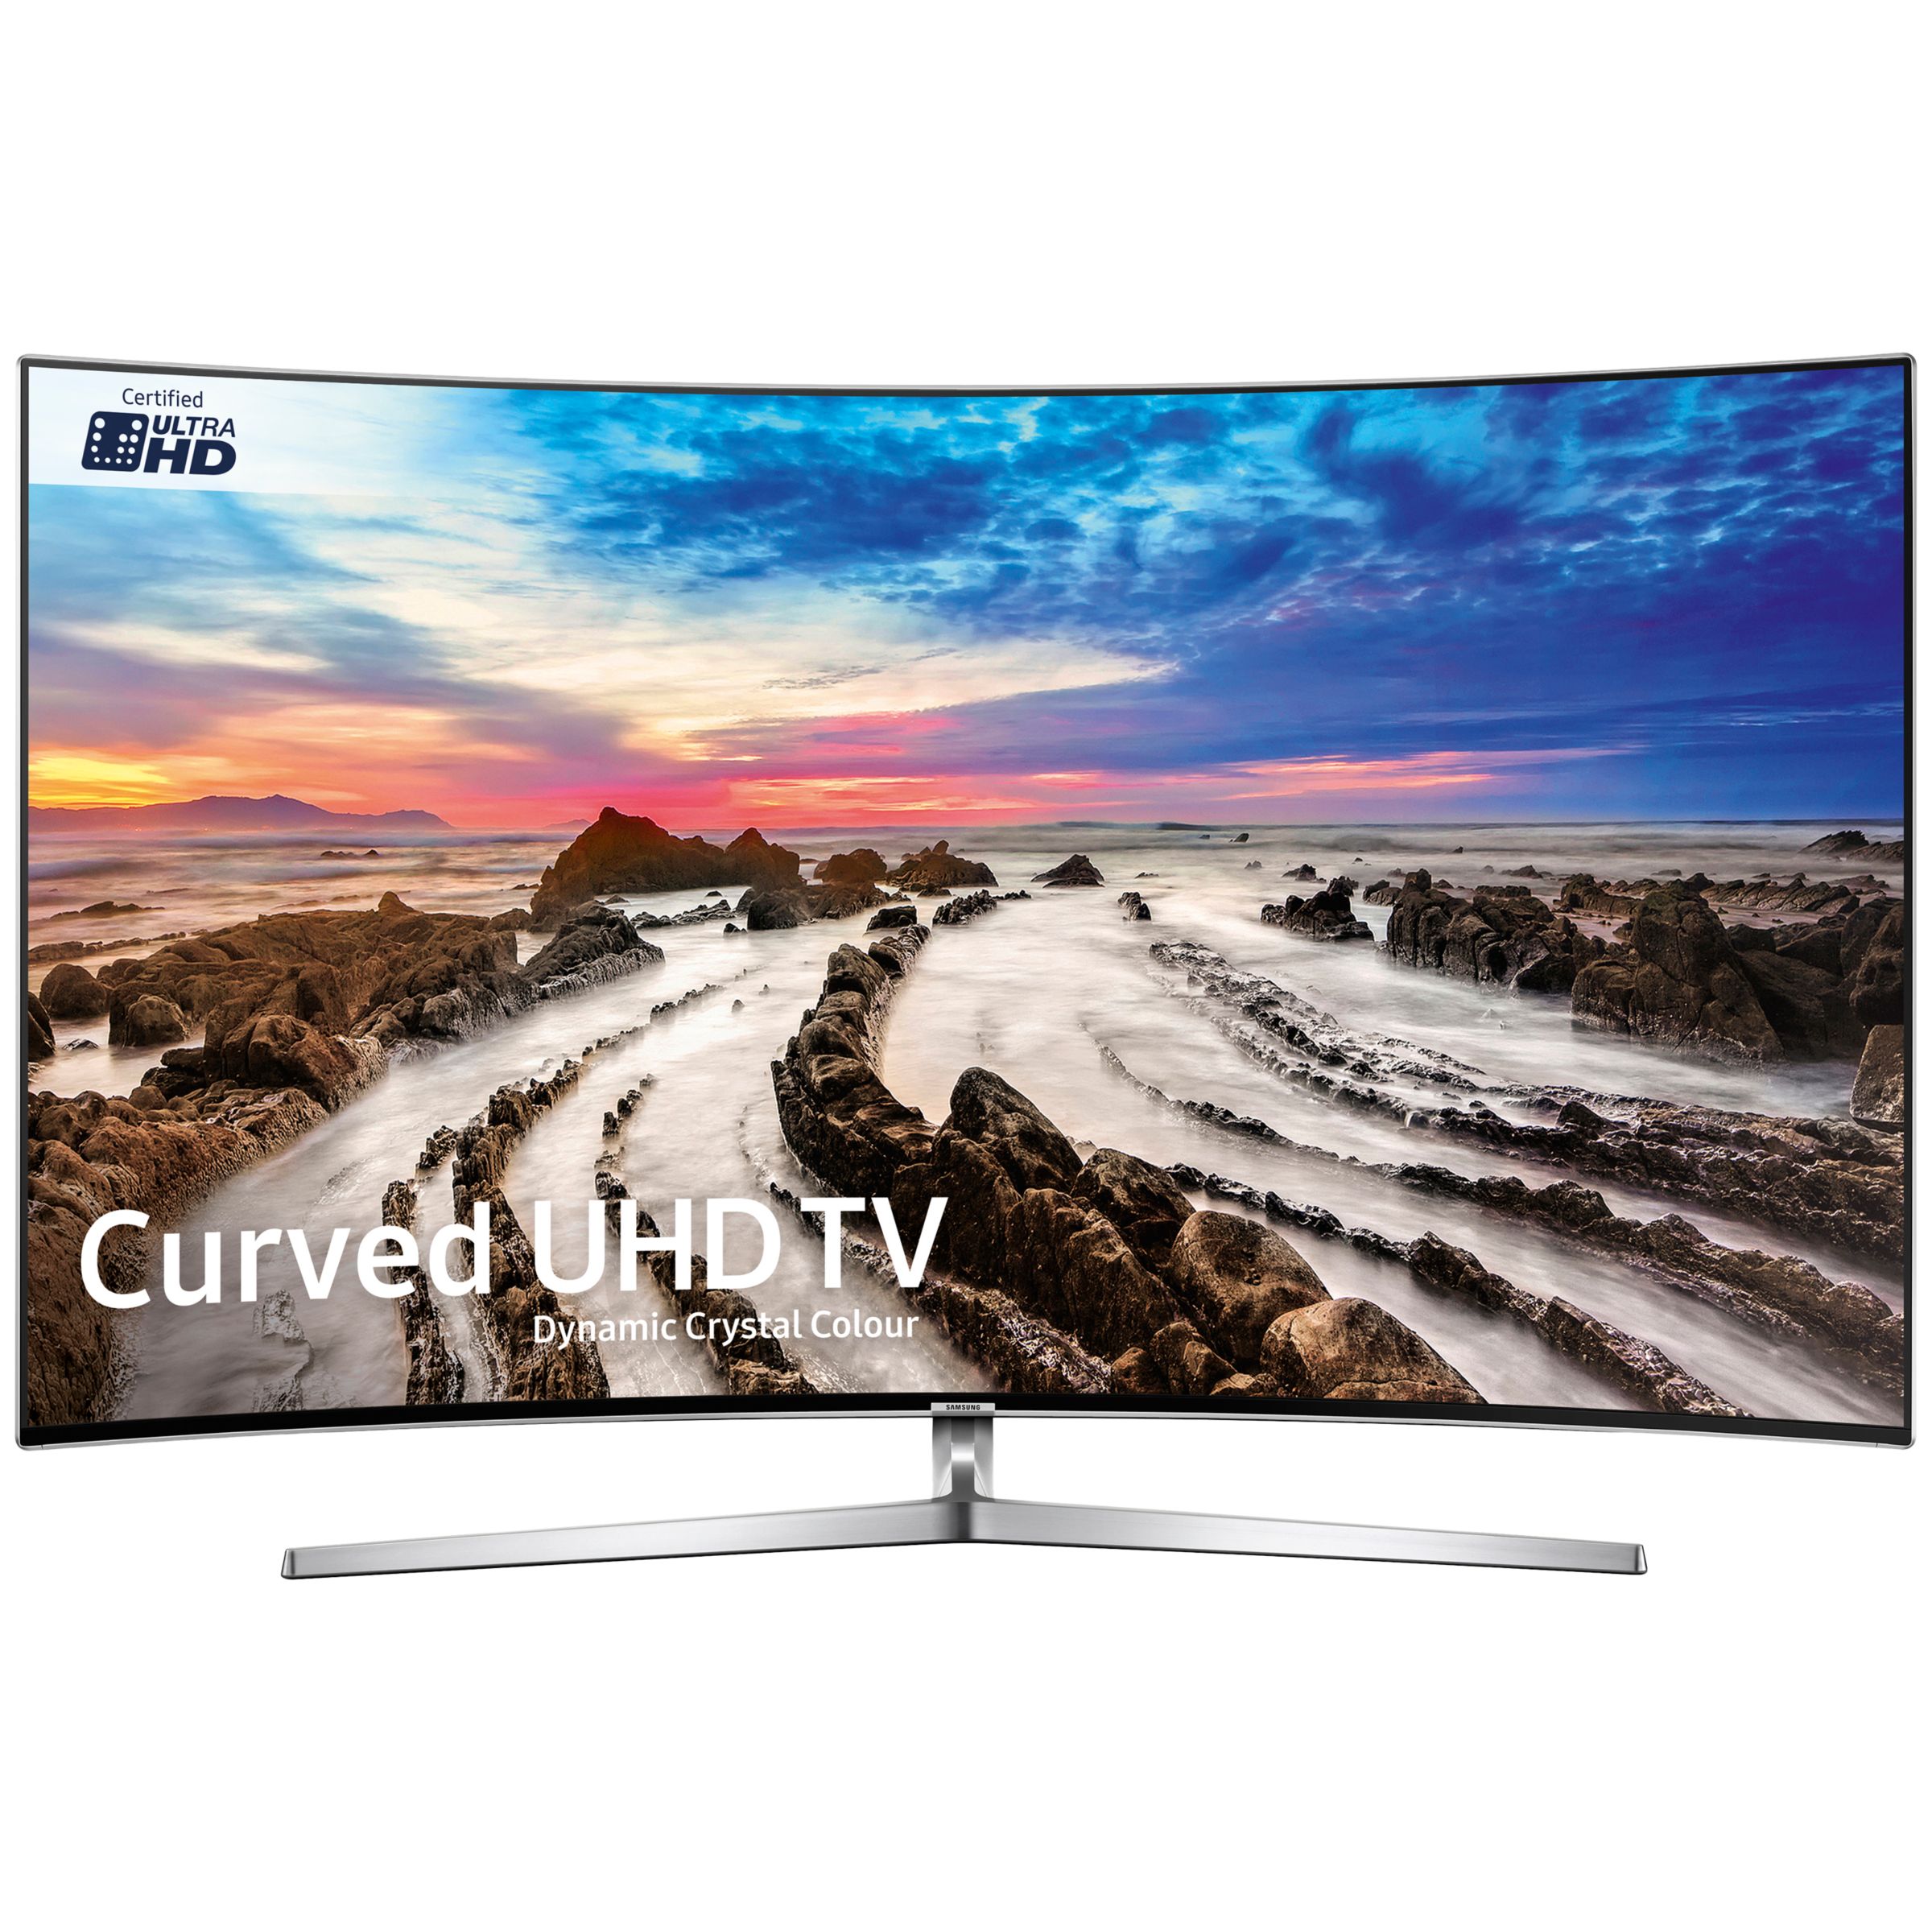 Samsung UE65MU9000 Curved HDR 1000 4K Ultra HD Smart TV, 65" with TVPlus/Freesat HD, Dynamic Crystal Colour & 360 Design, Ultra HD Certified, Silver